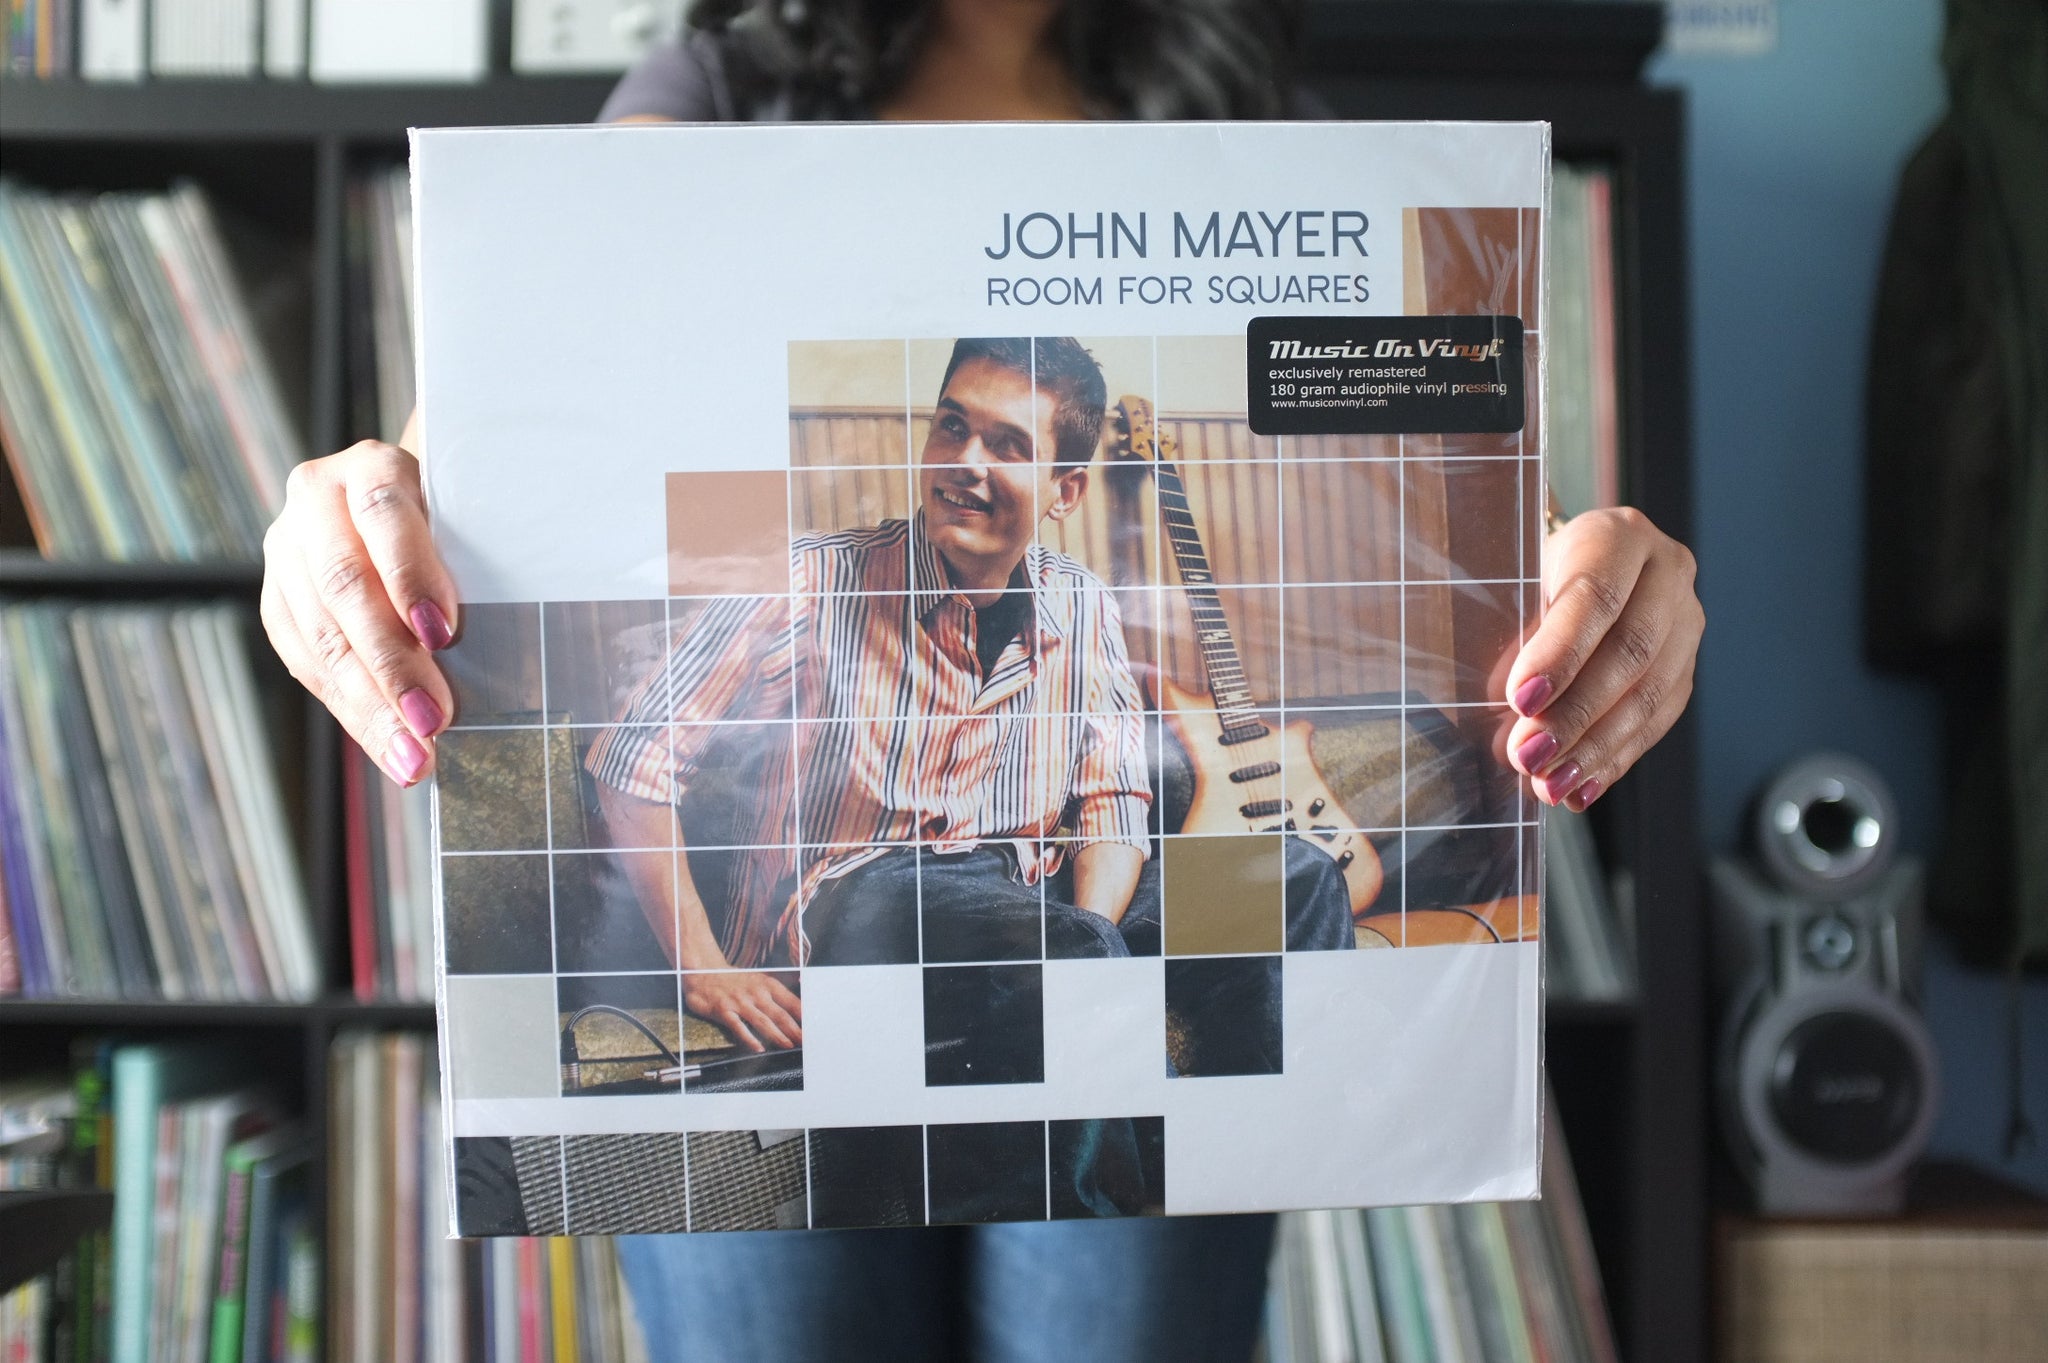 John Mayer Room For Squares